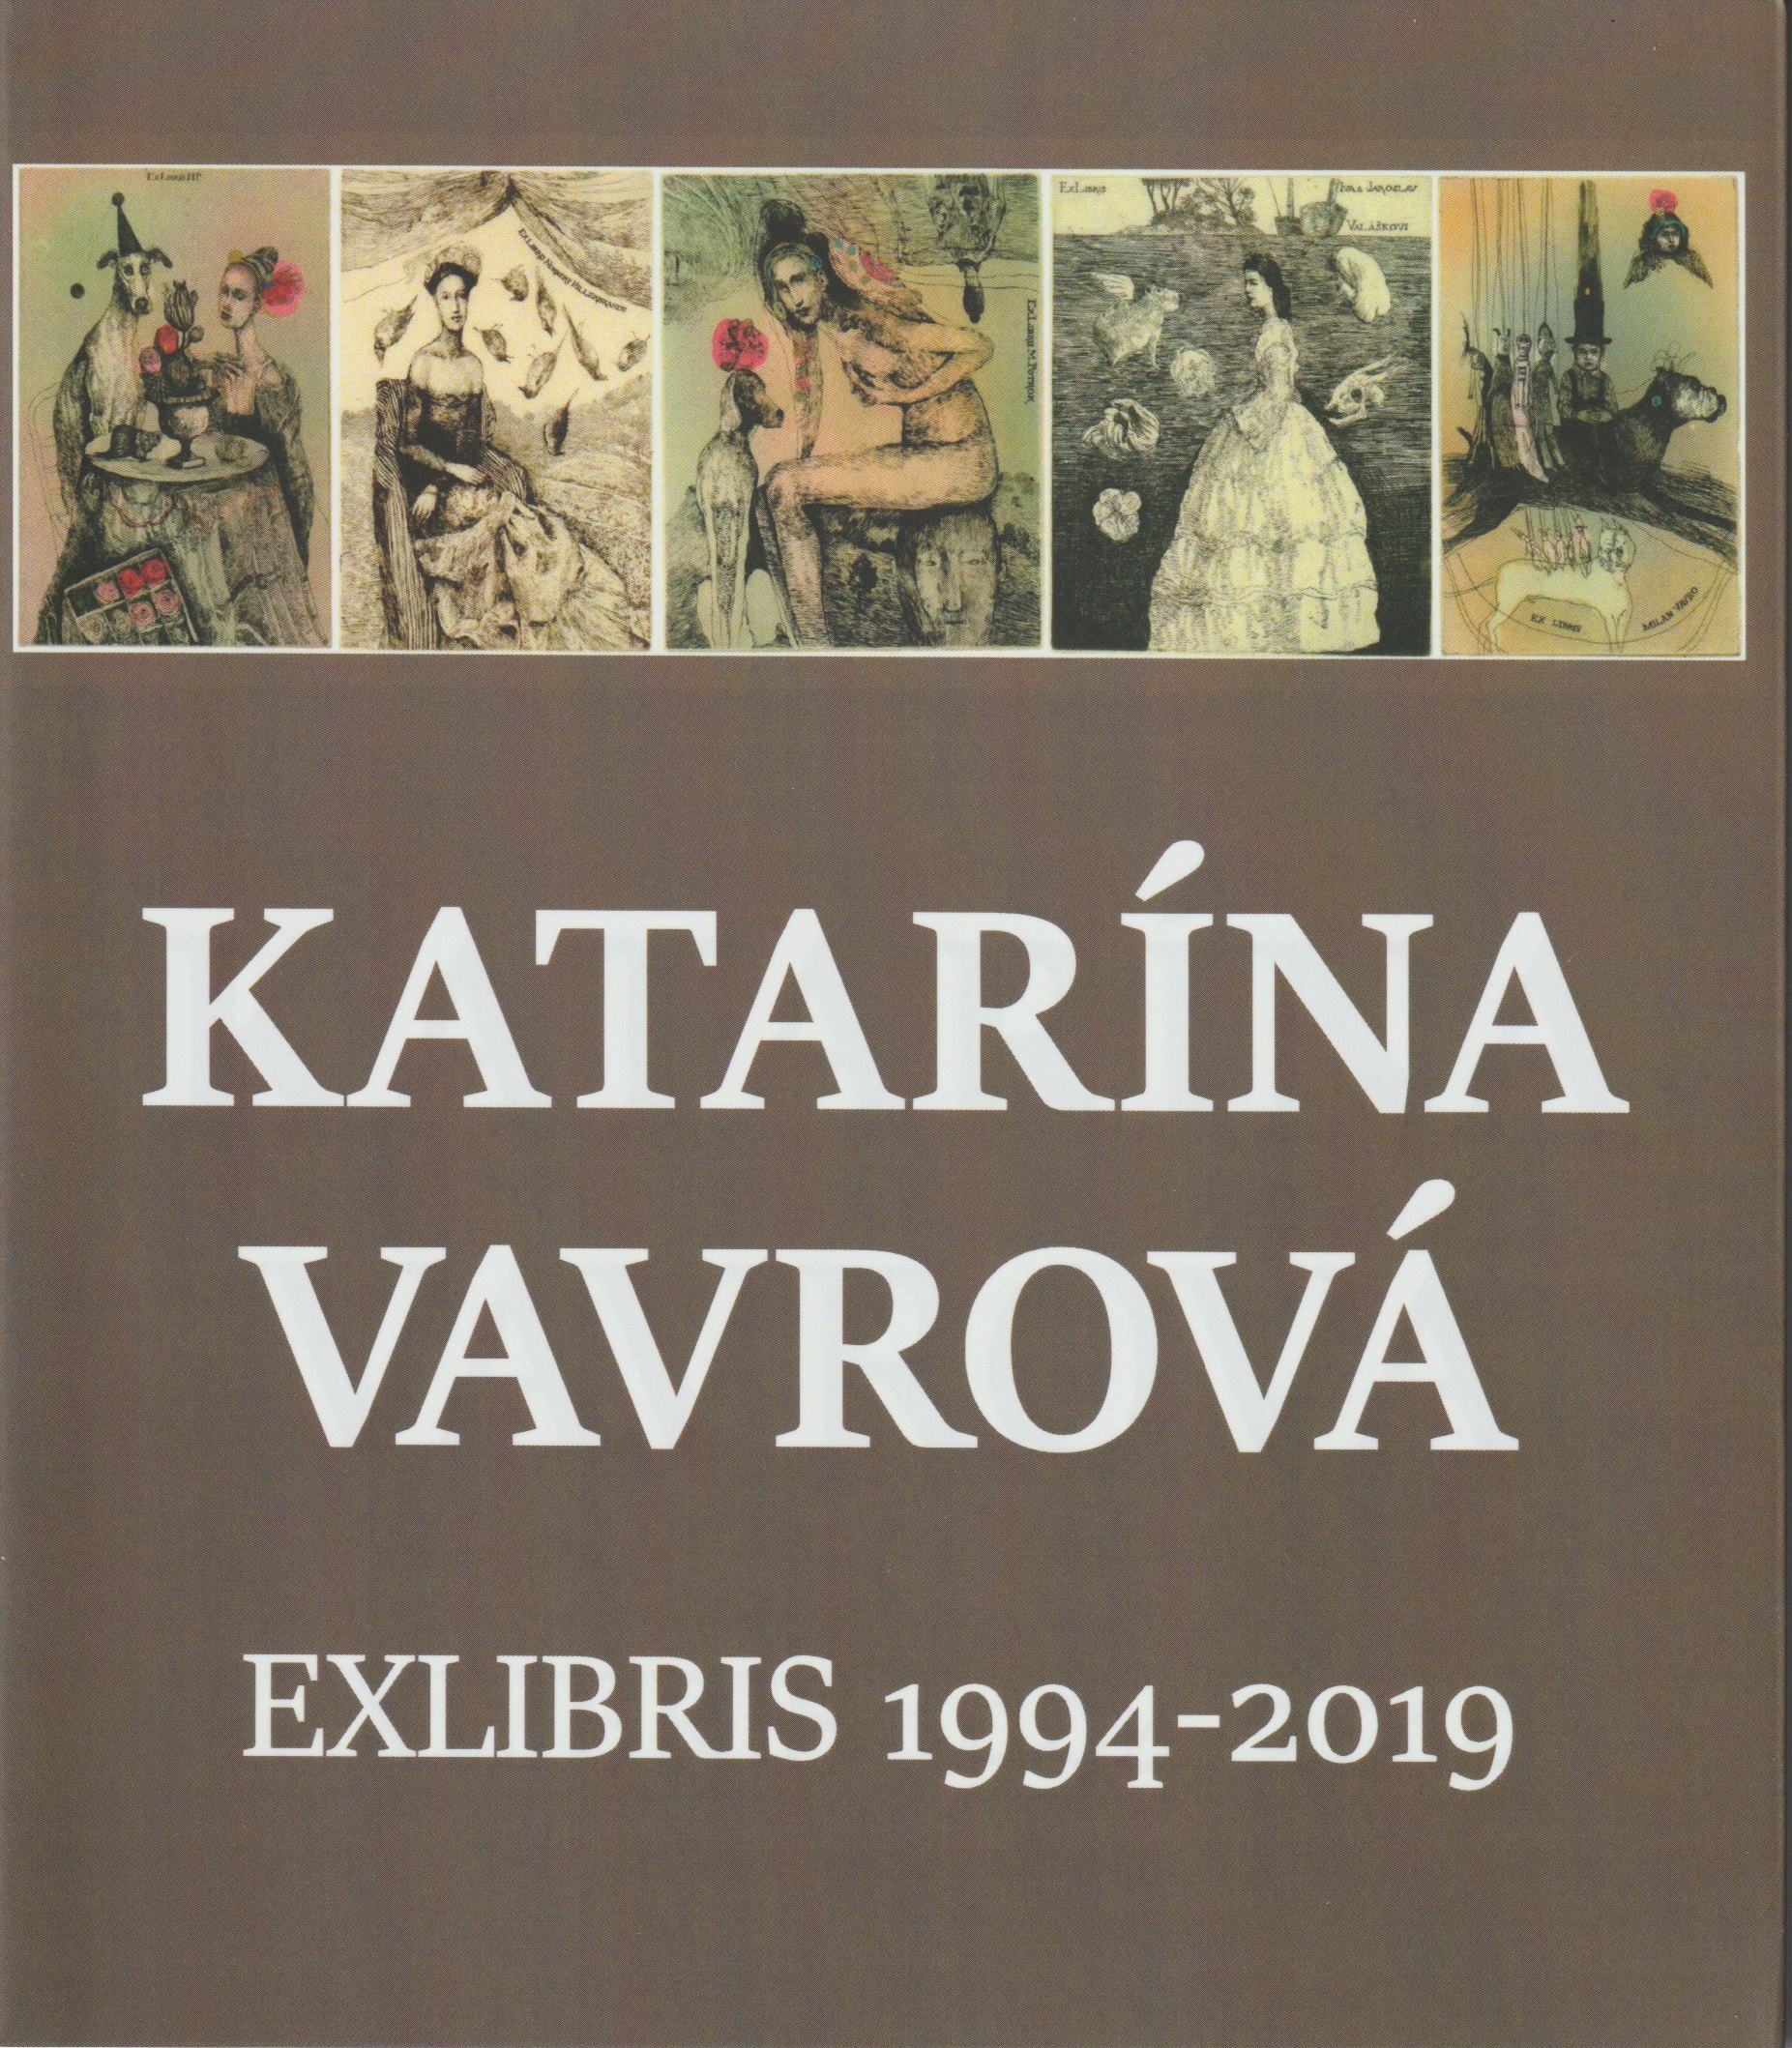 EXLIBRIS 1994 - 2019 - KUW Gallery